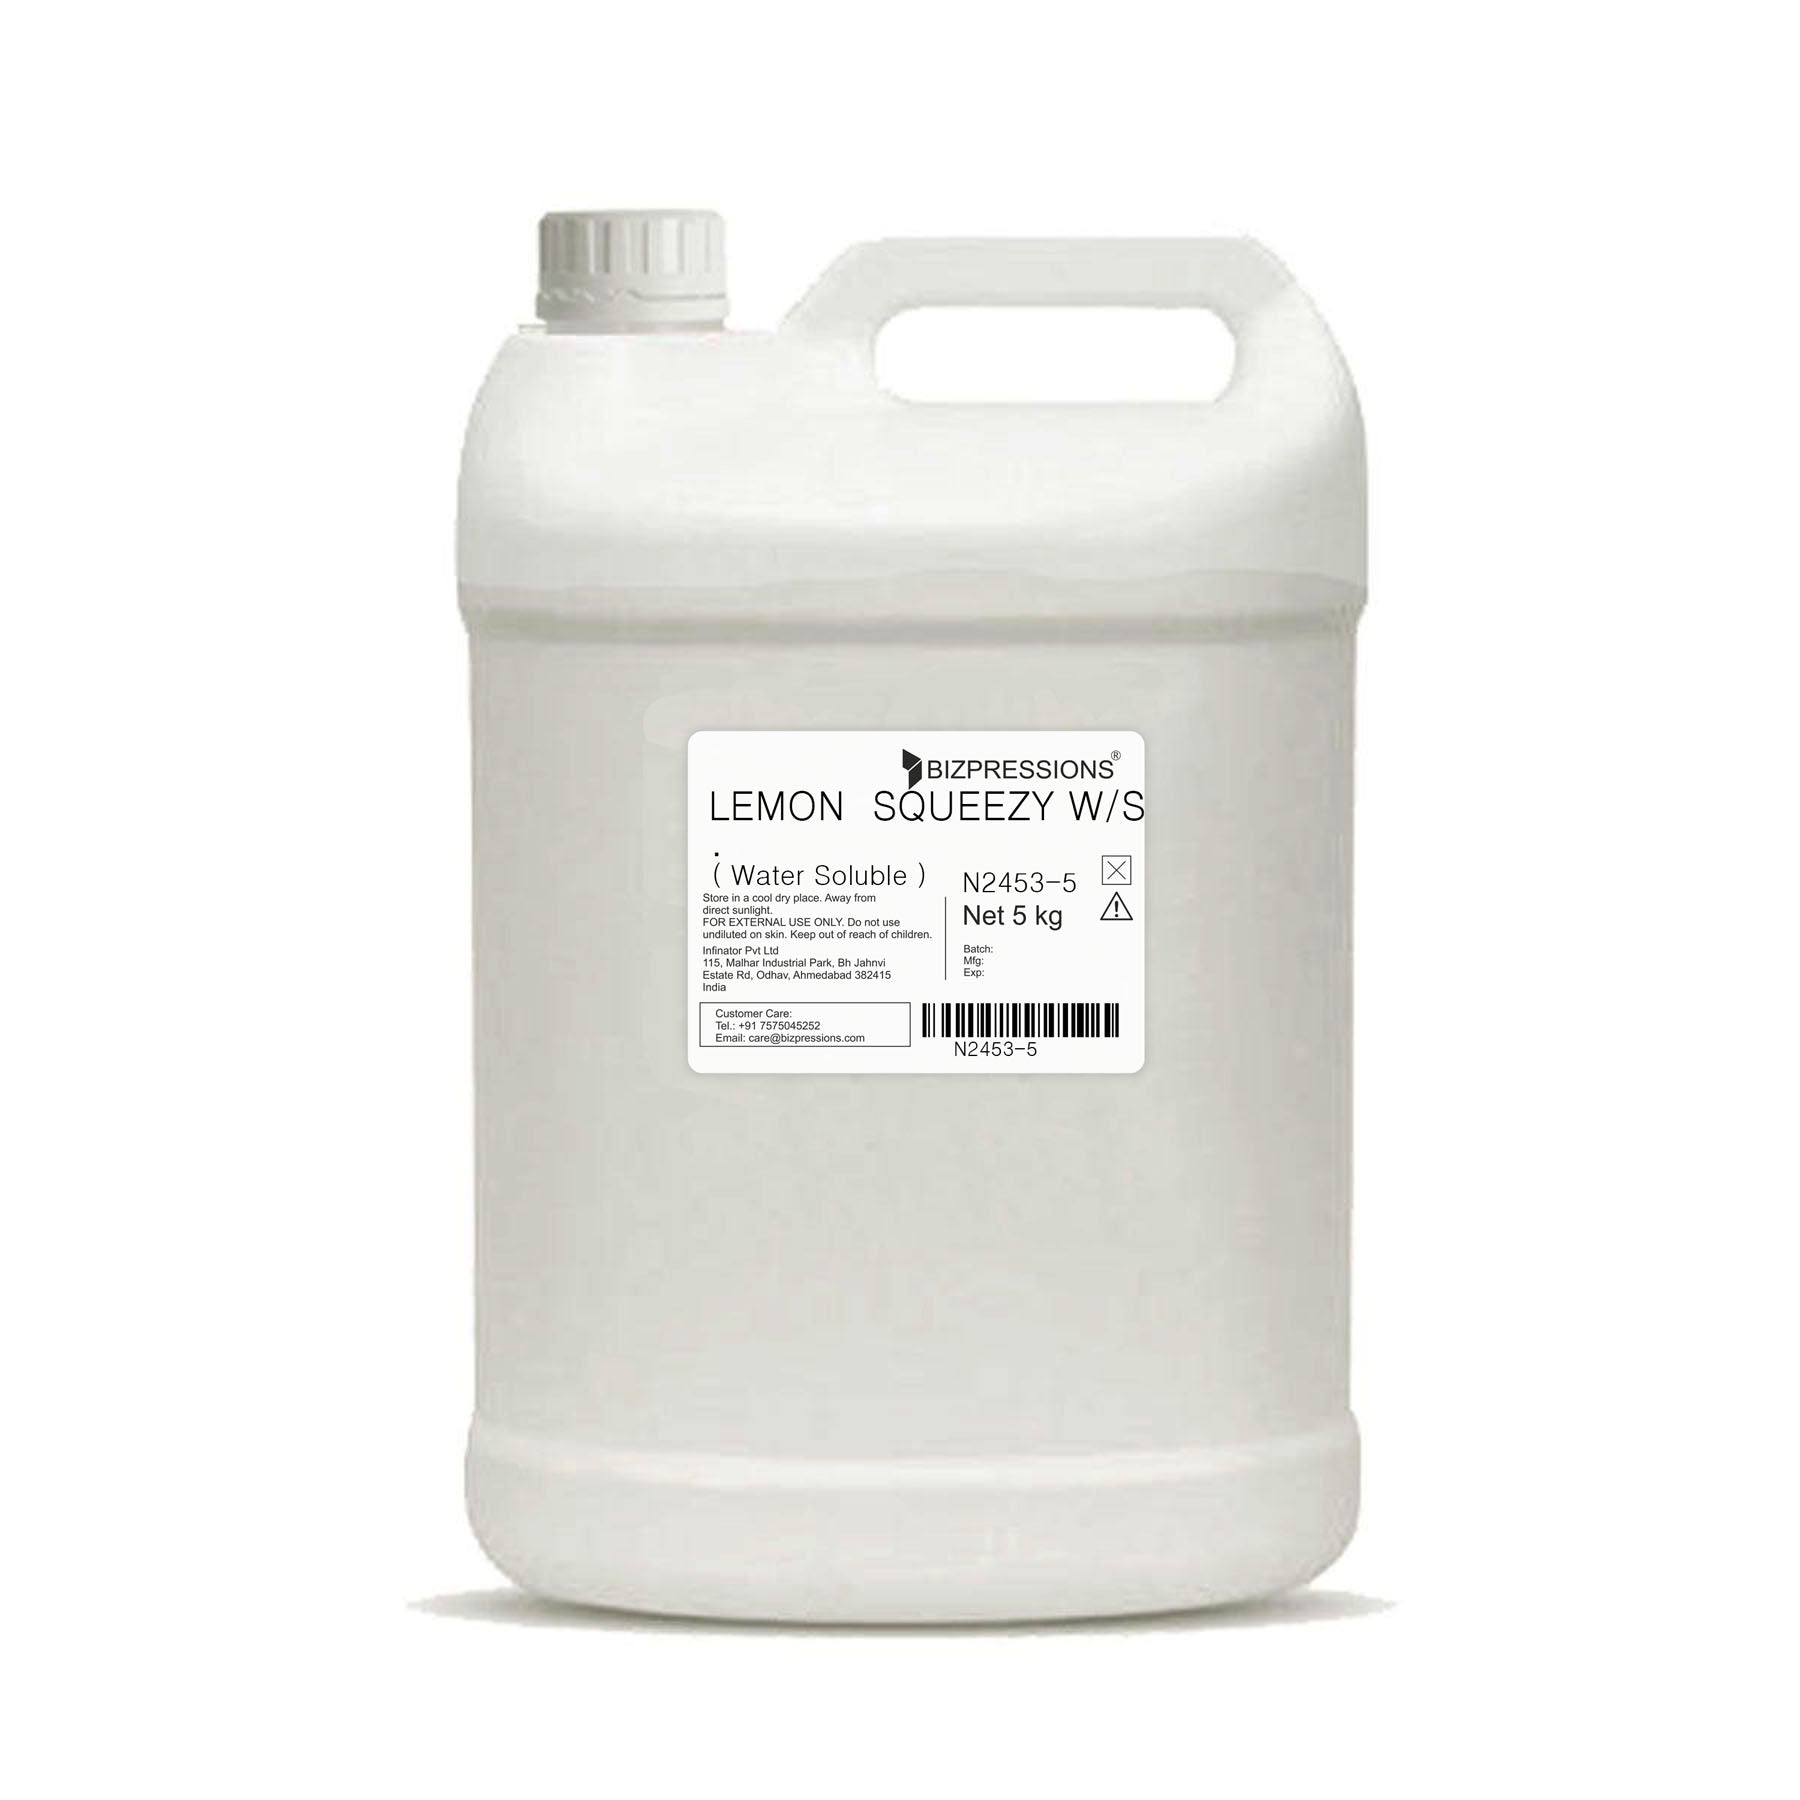 LEMON SQUEEZY W/S - Fragrance ( Water Soluble ) - 5 kg